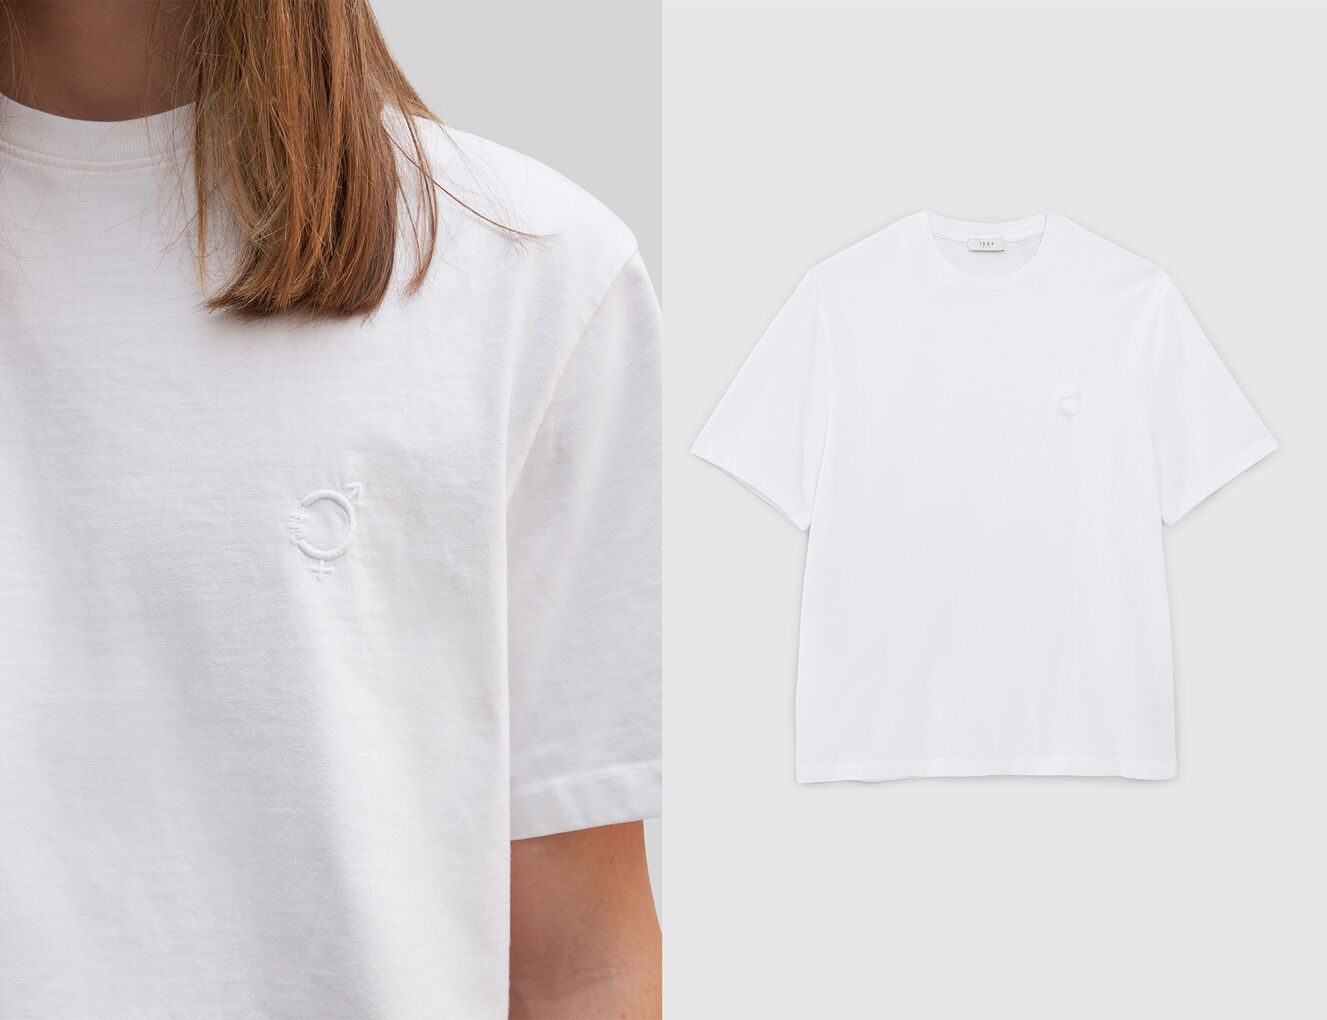 Unisex white cotton embroidered Gender Free T-shirt - IKKS-4